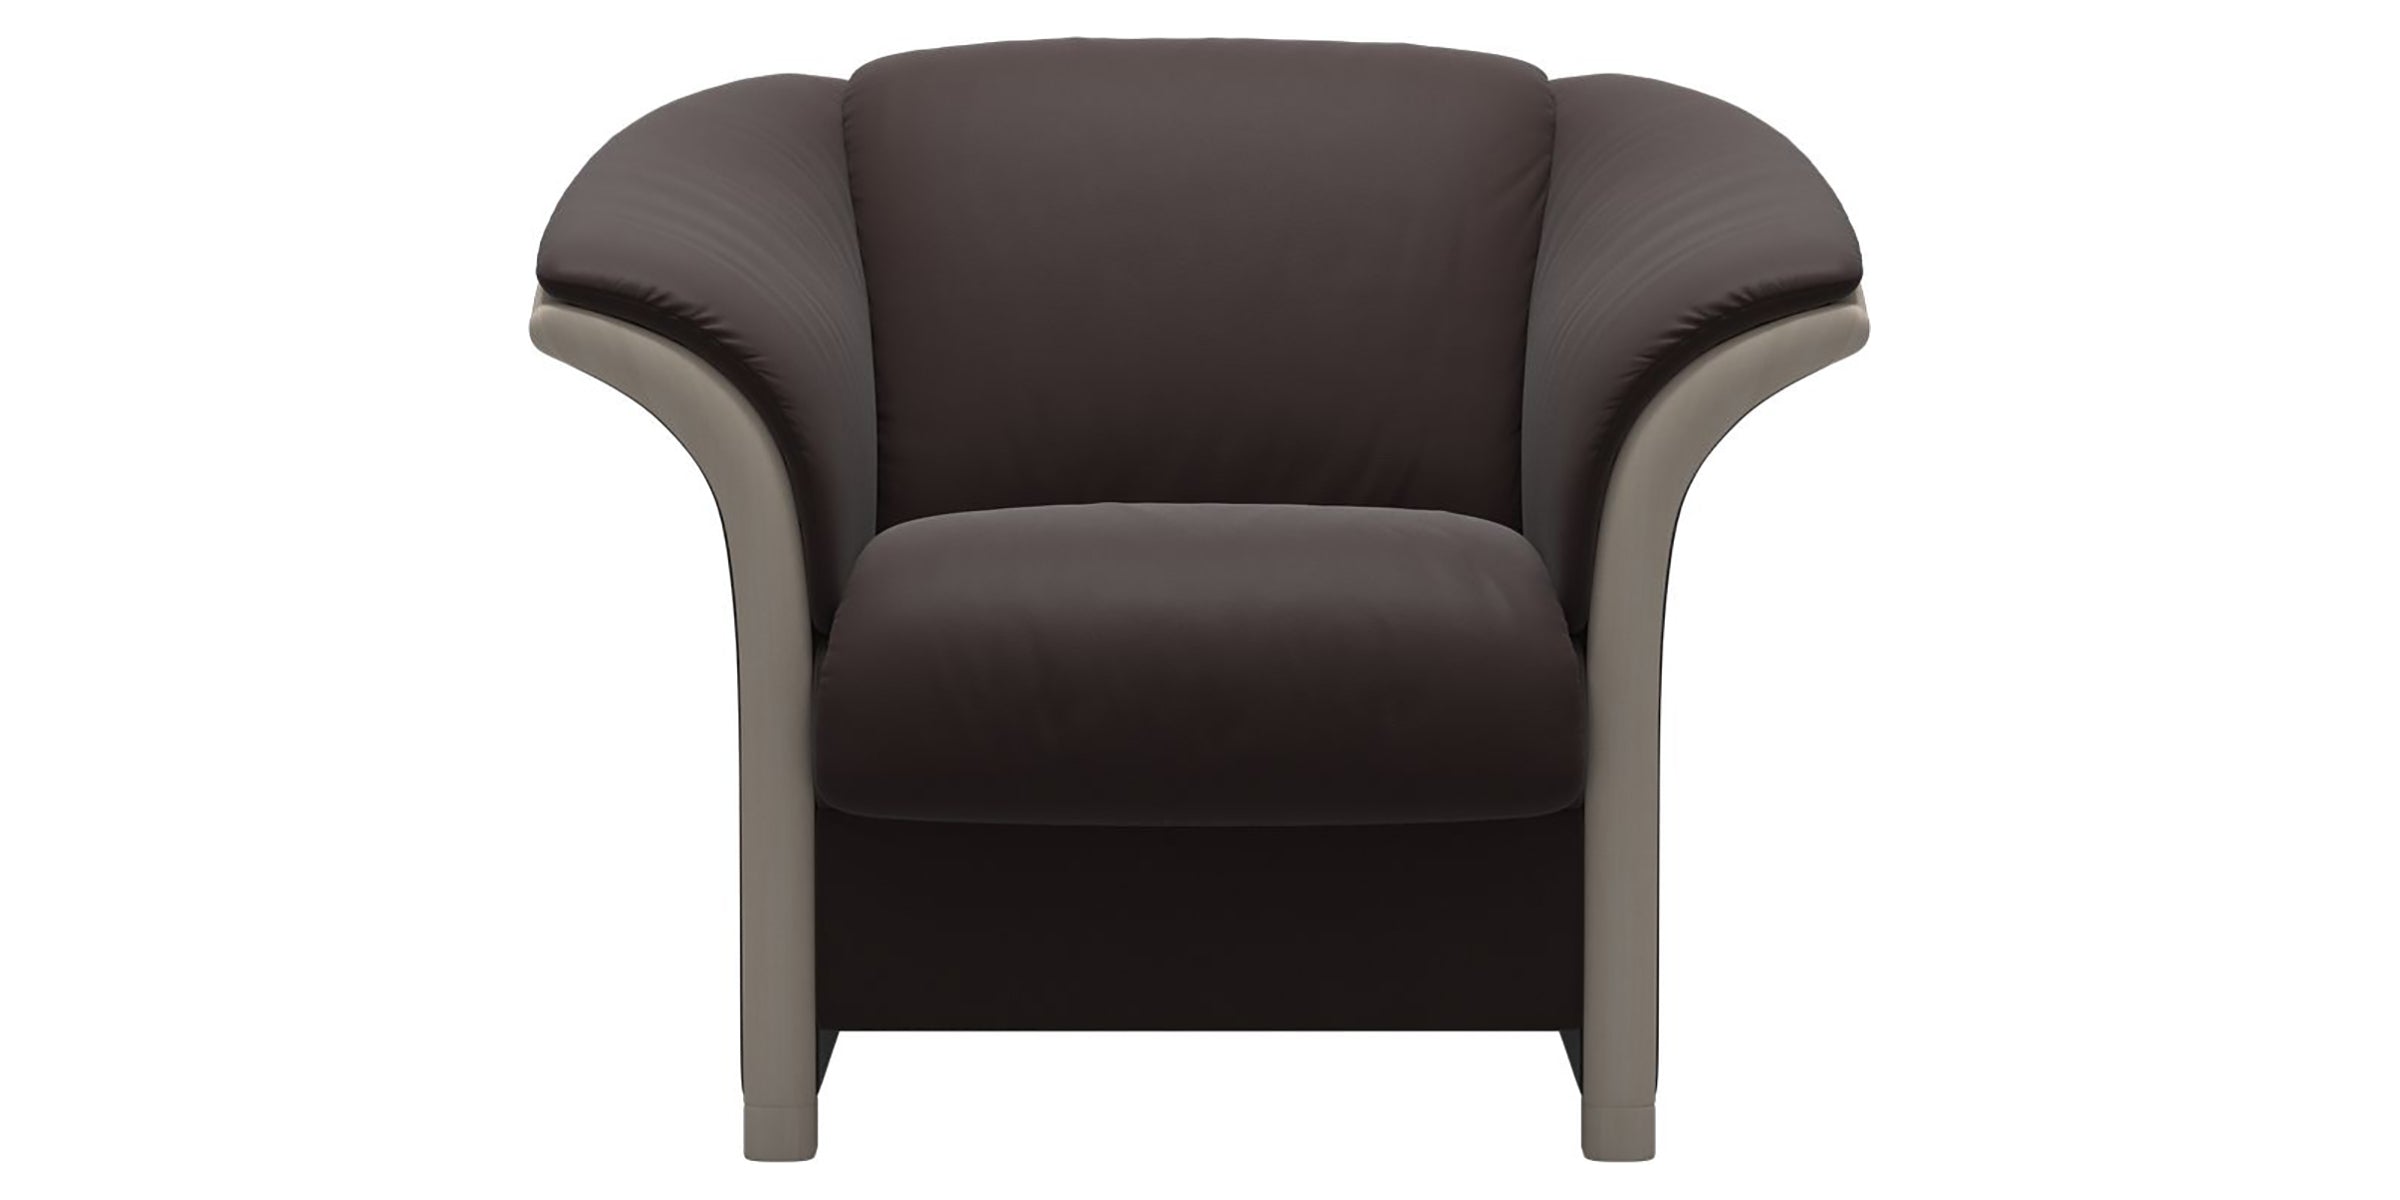 Paloma Leather Chocolate and Whitewash Arm Trim | Stressless Manhattan Chair | Valley Ridge Furniture